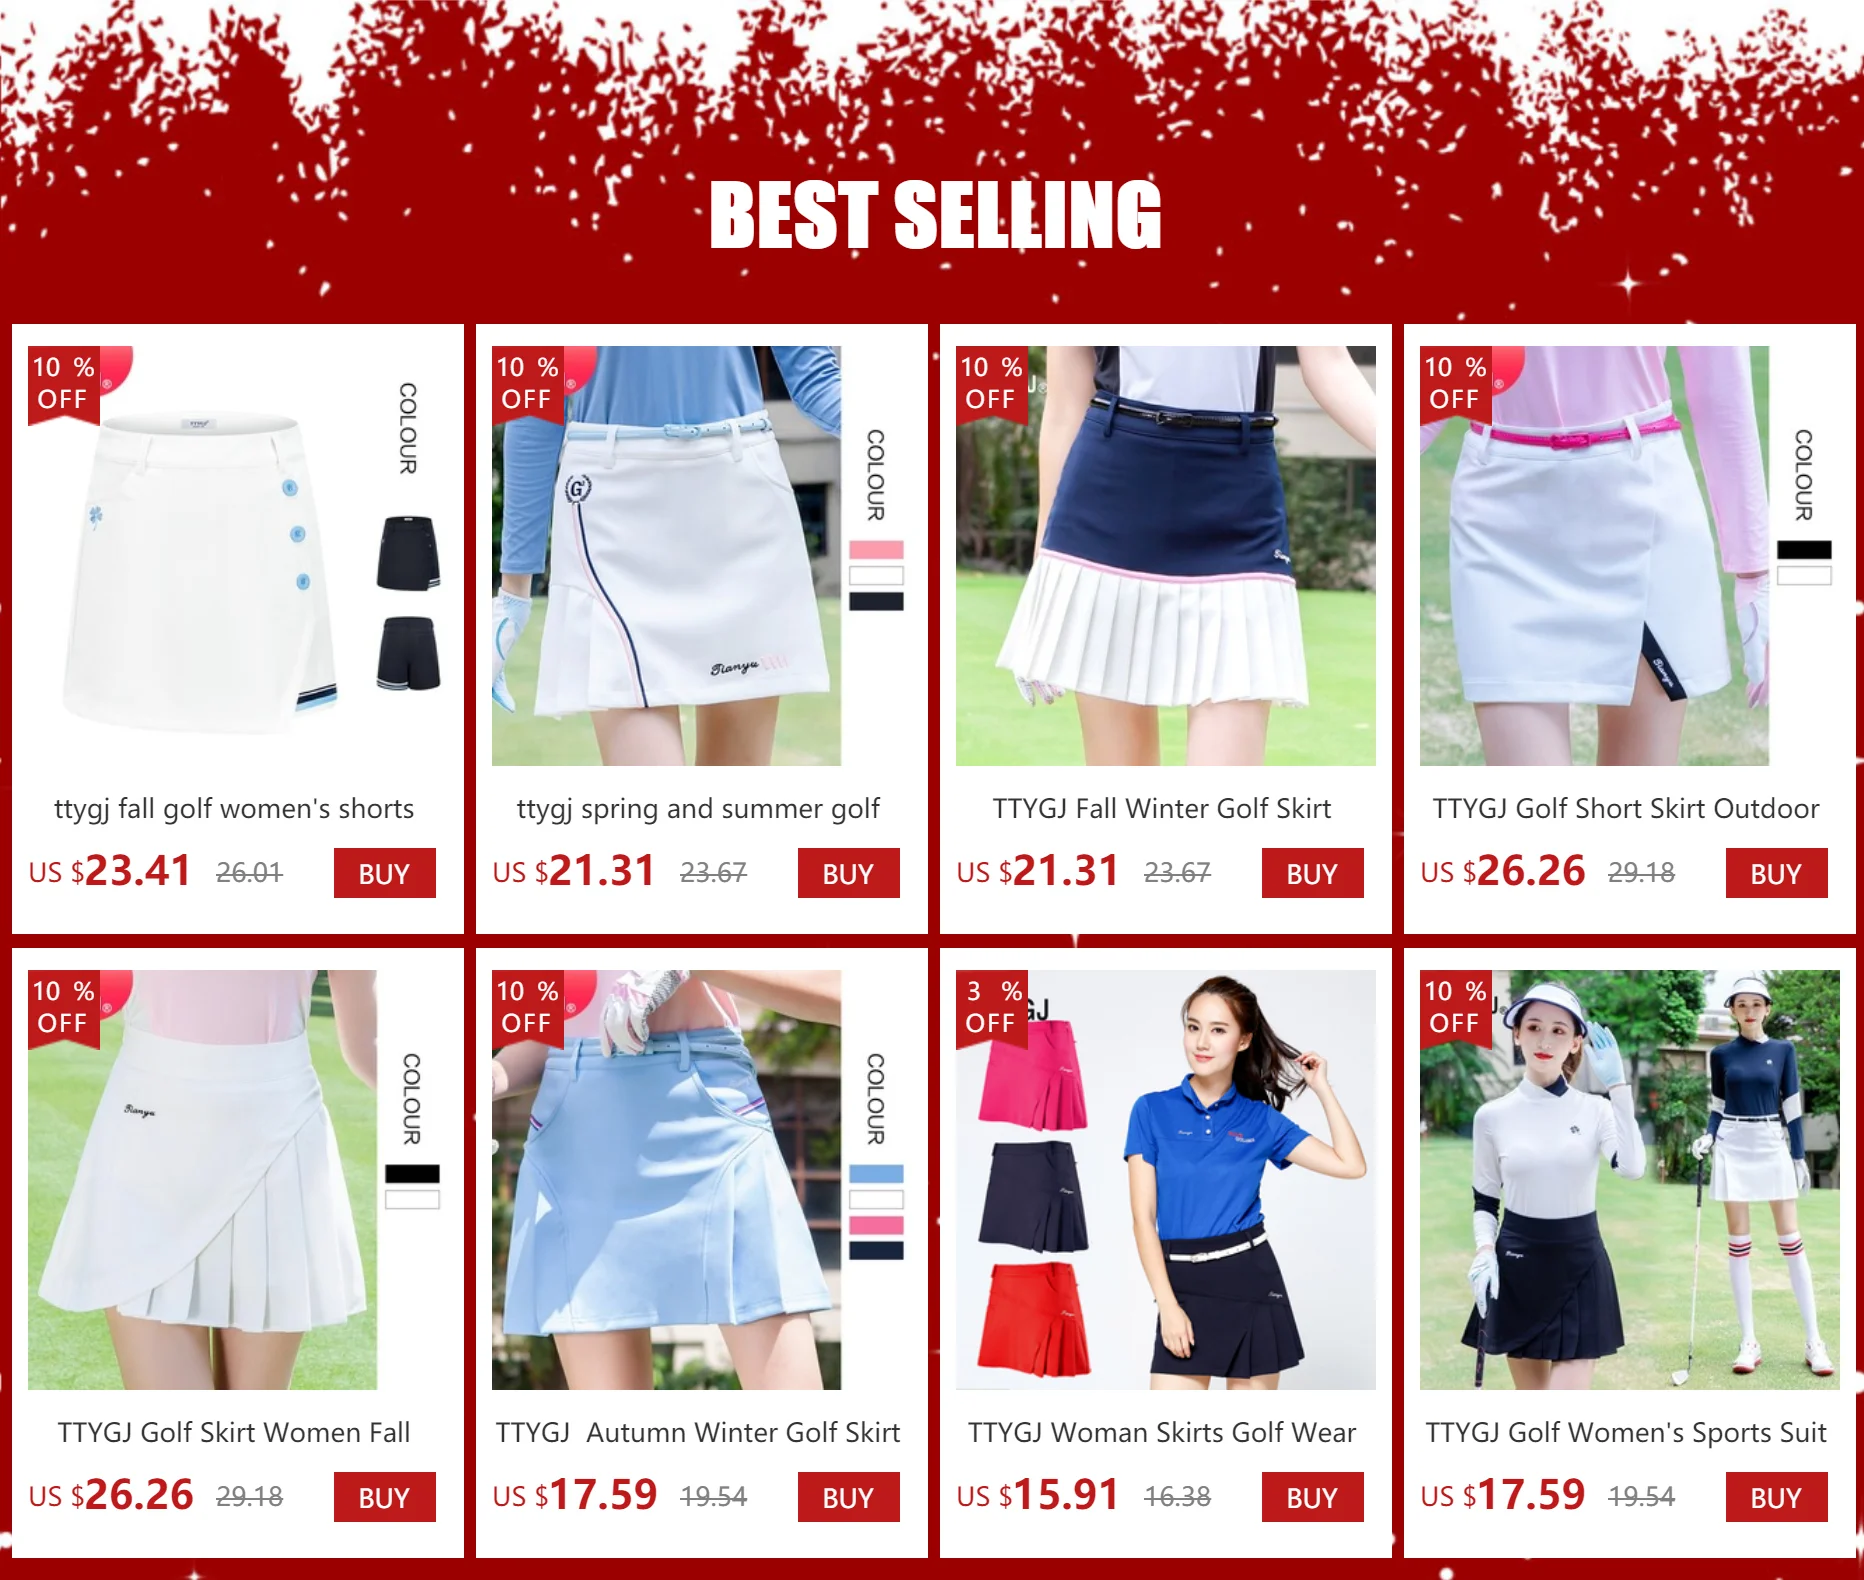 Ttygj Golf Women's Sports Suit Long Sleeve Top Sun Protects Ladies ...